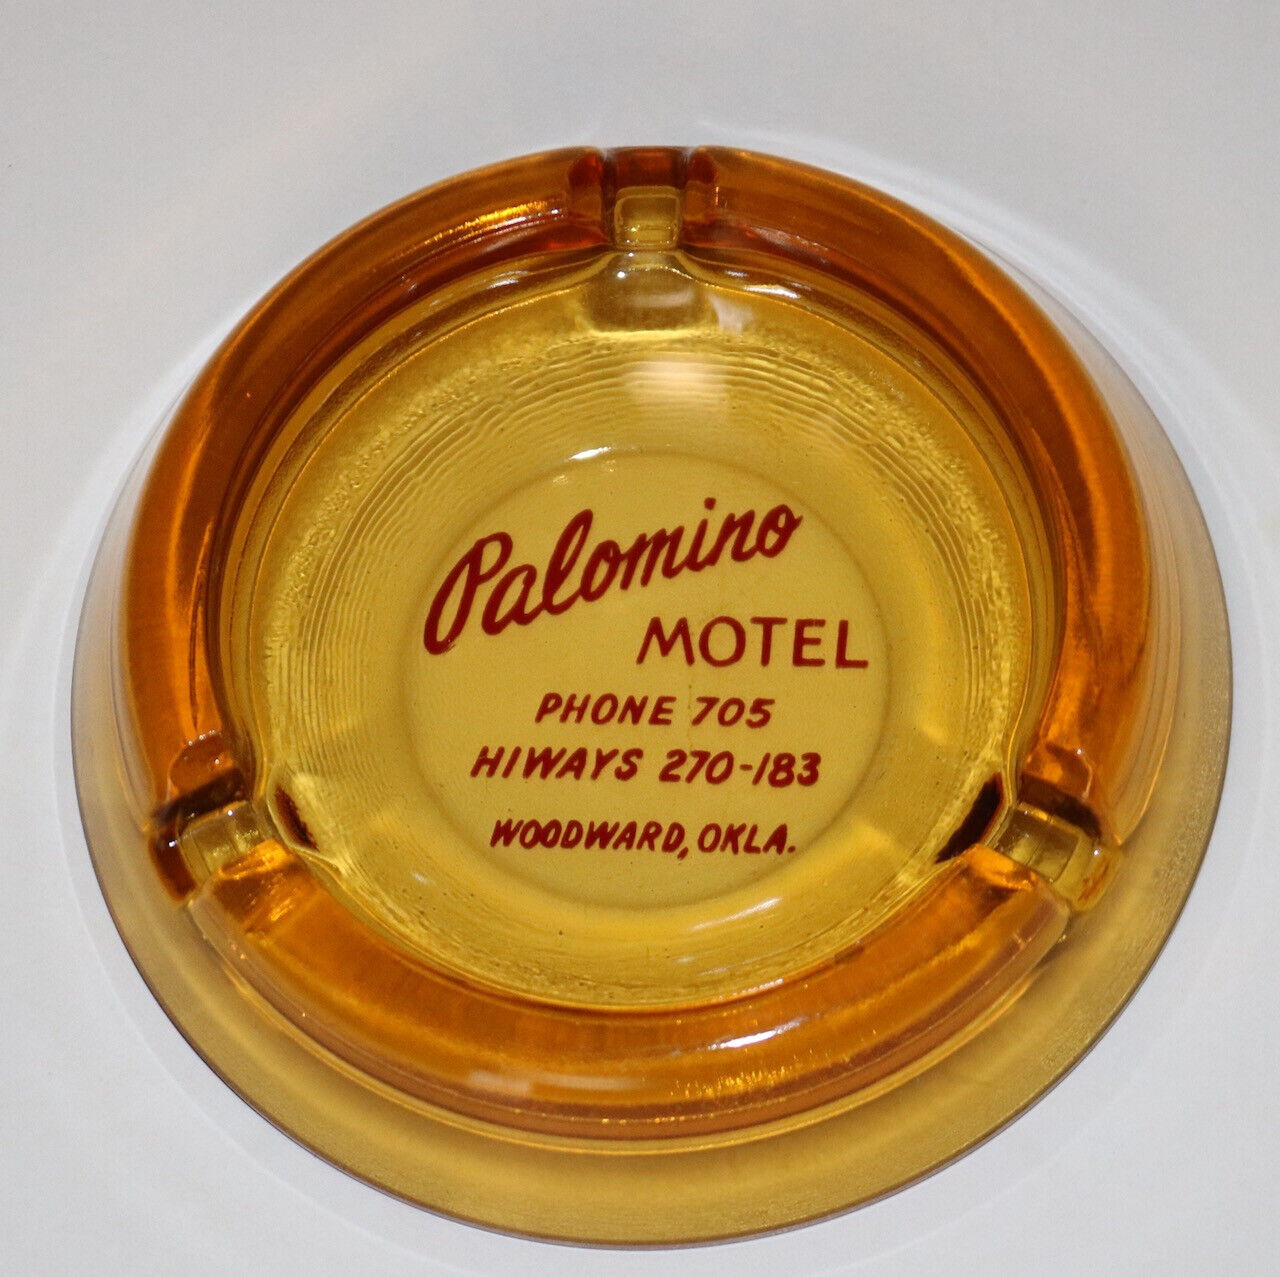 Palomino Motel Oklahoma vintage advertising ashtray